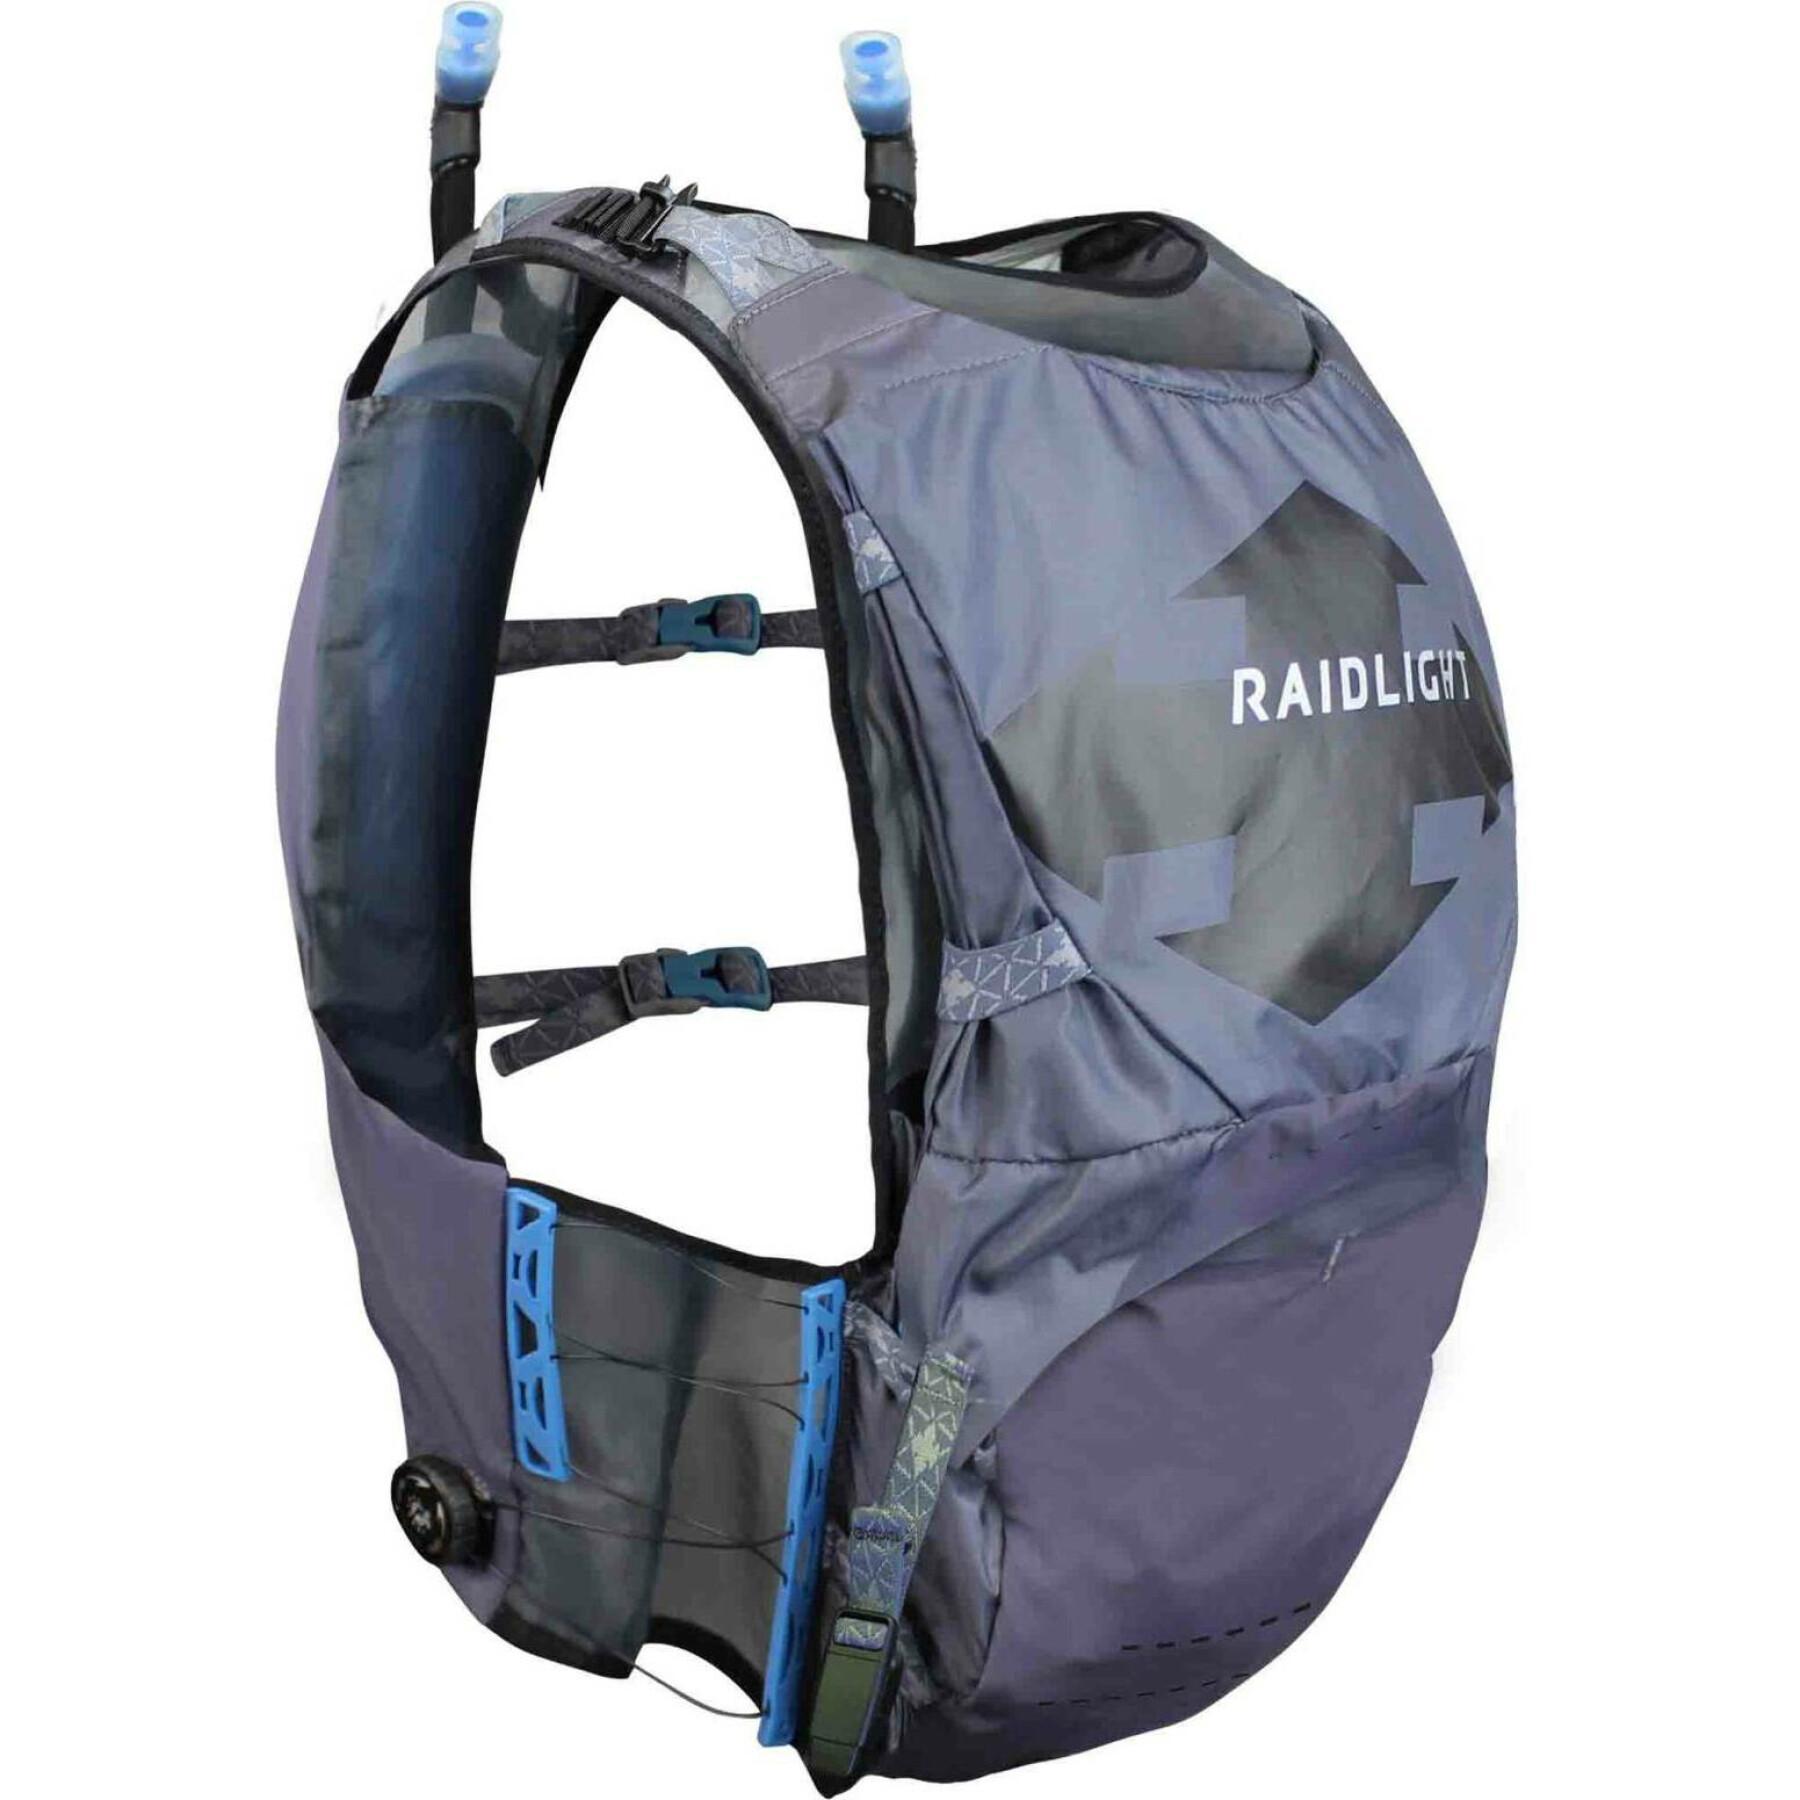 Backpack RaidLight revolutiv vest 12l